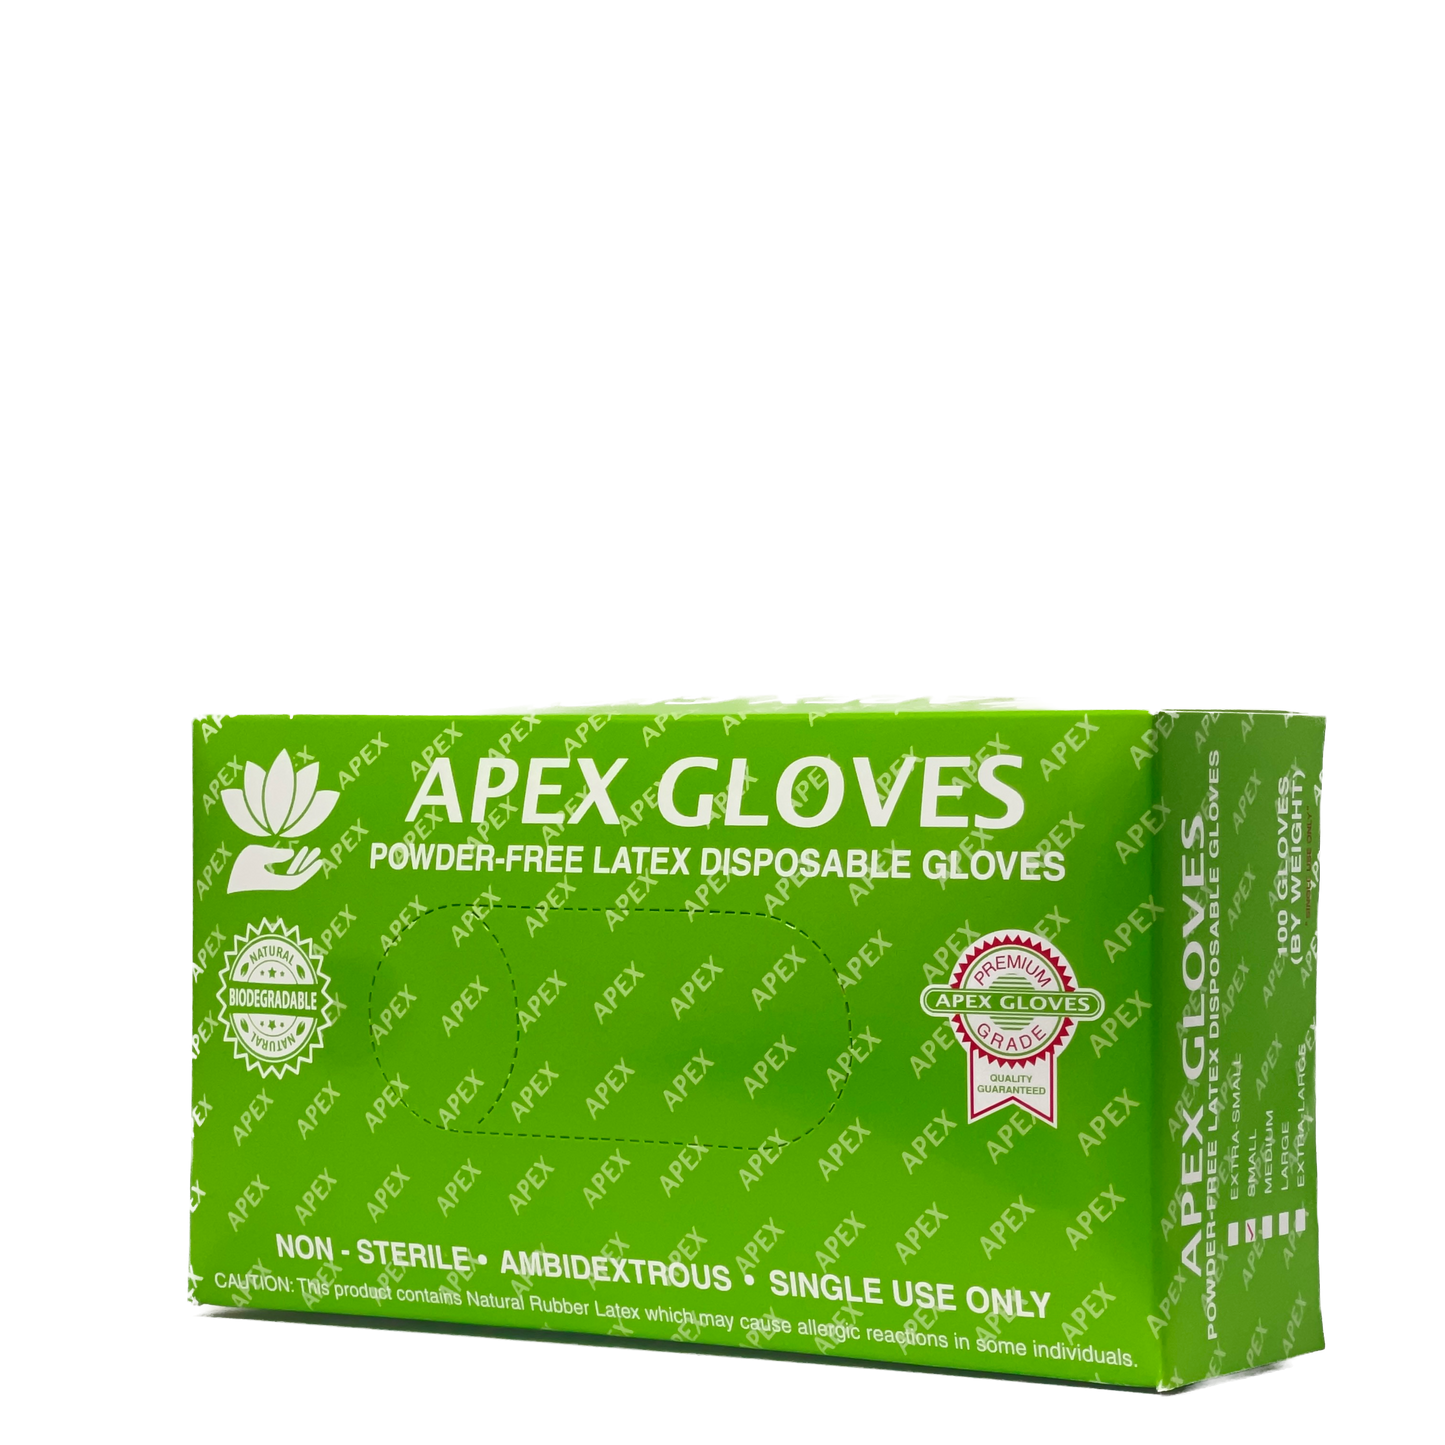 APEX Latex Disposable Gloves (10 boxes x 100 pieces)